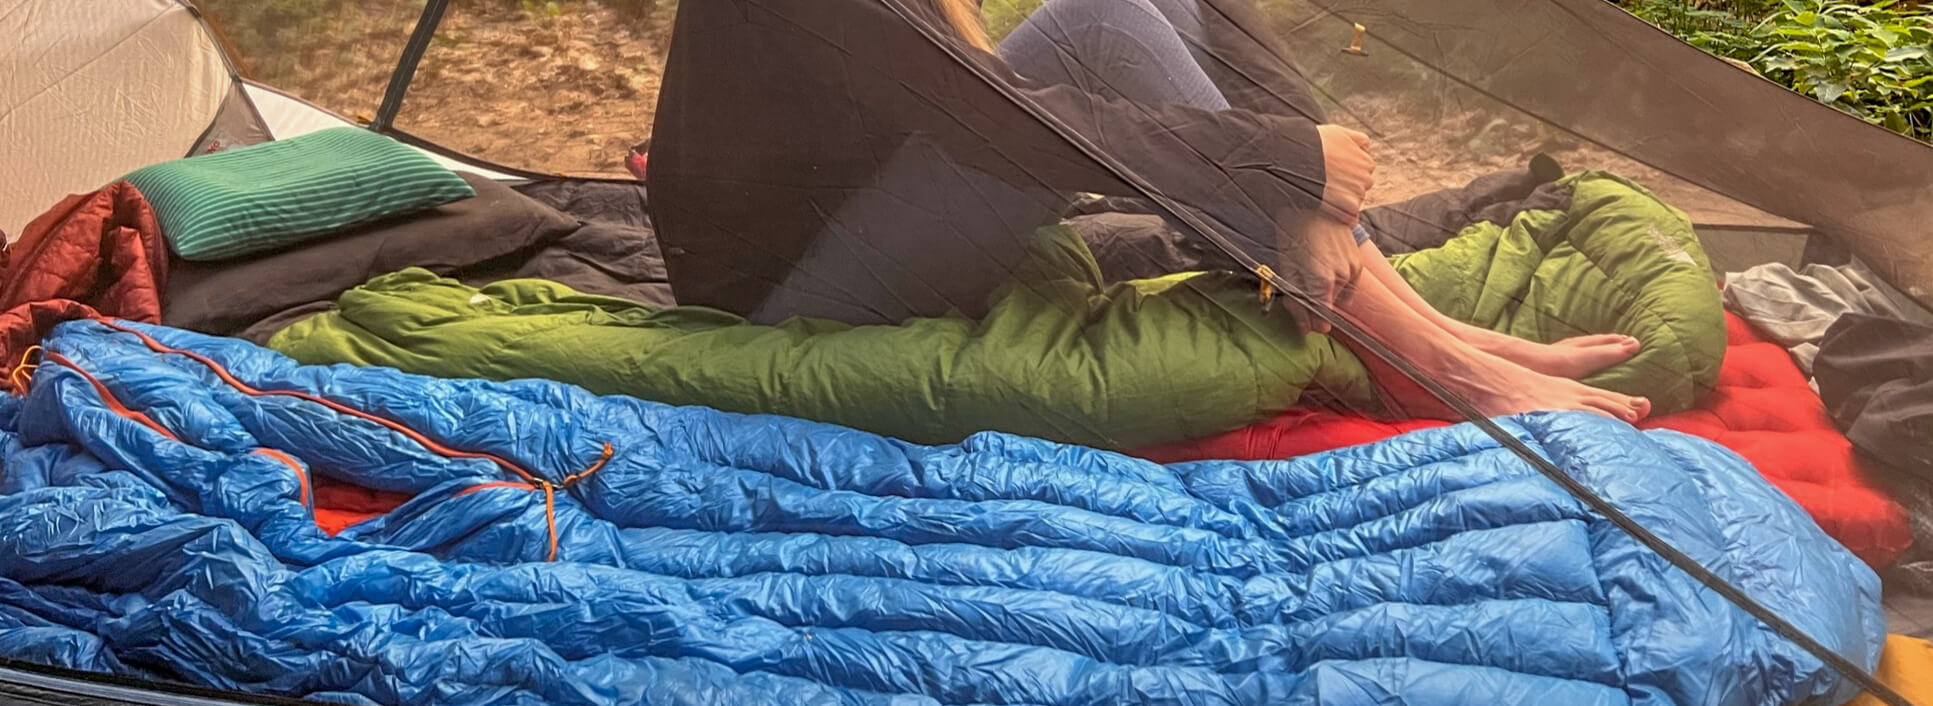 Patagonia Sleeping Bag in a tent